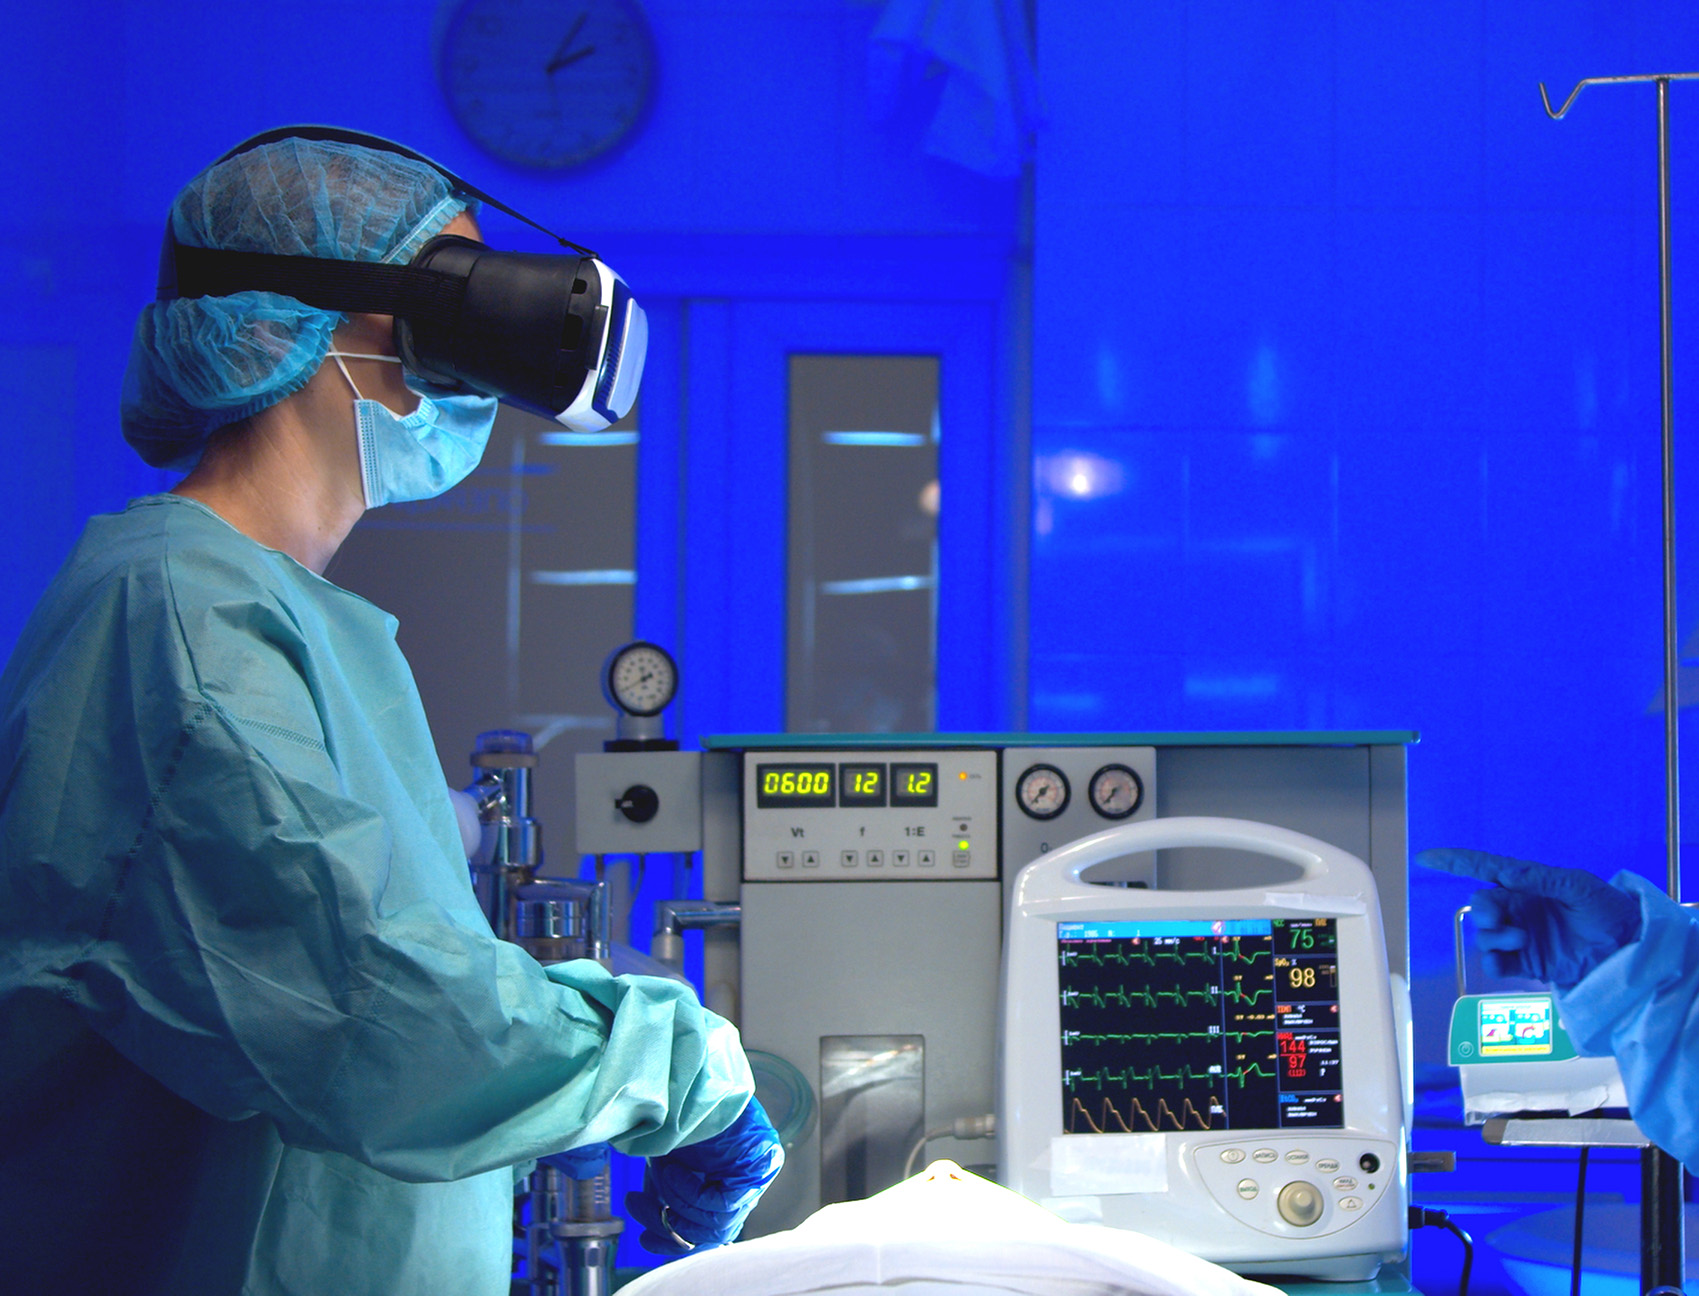 Surgeon Education: The Reality of the Future is Virtual - PrecisionOS